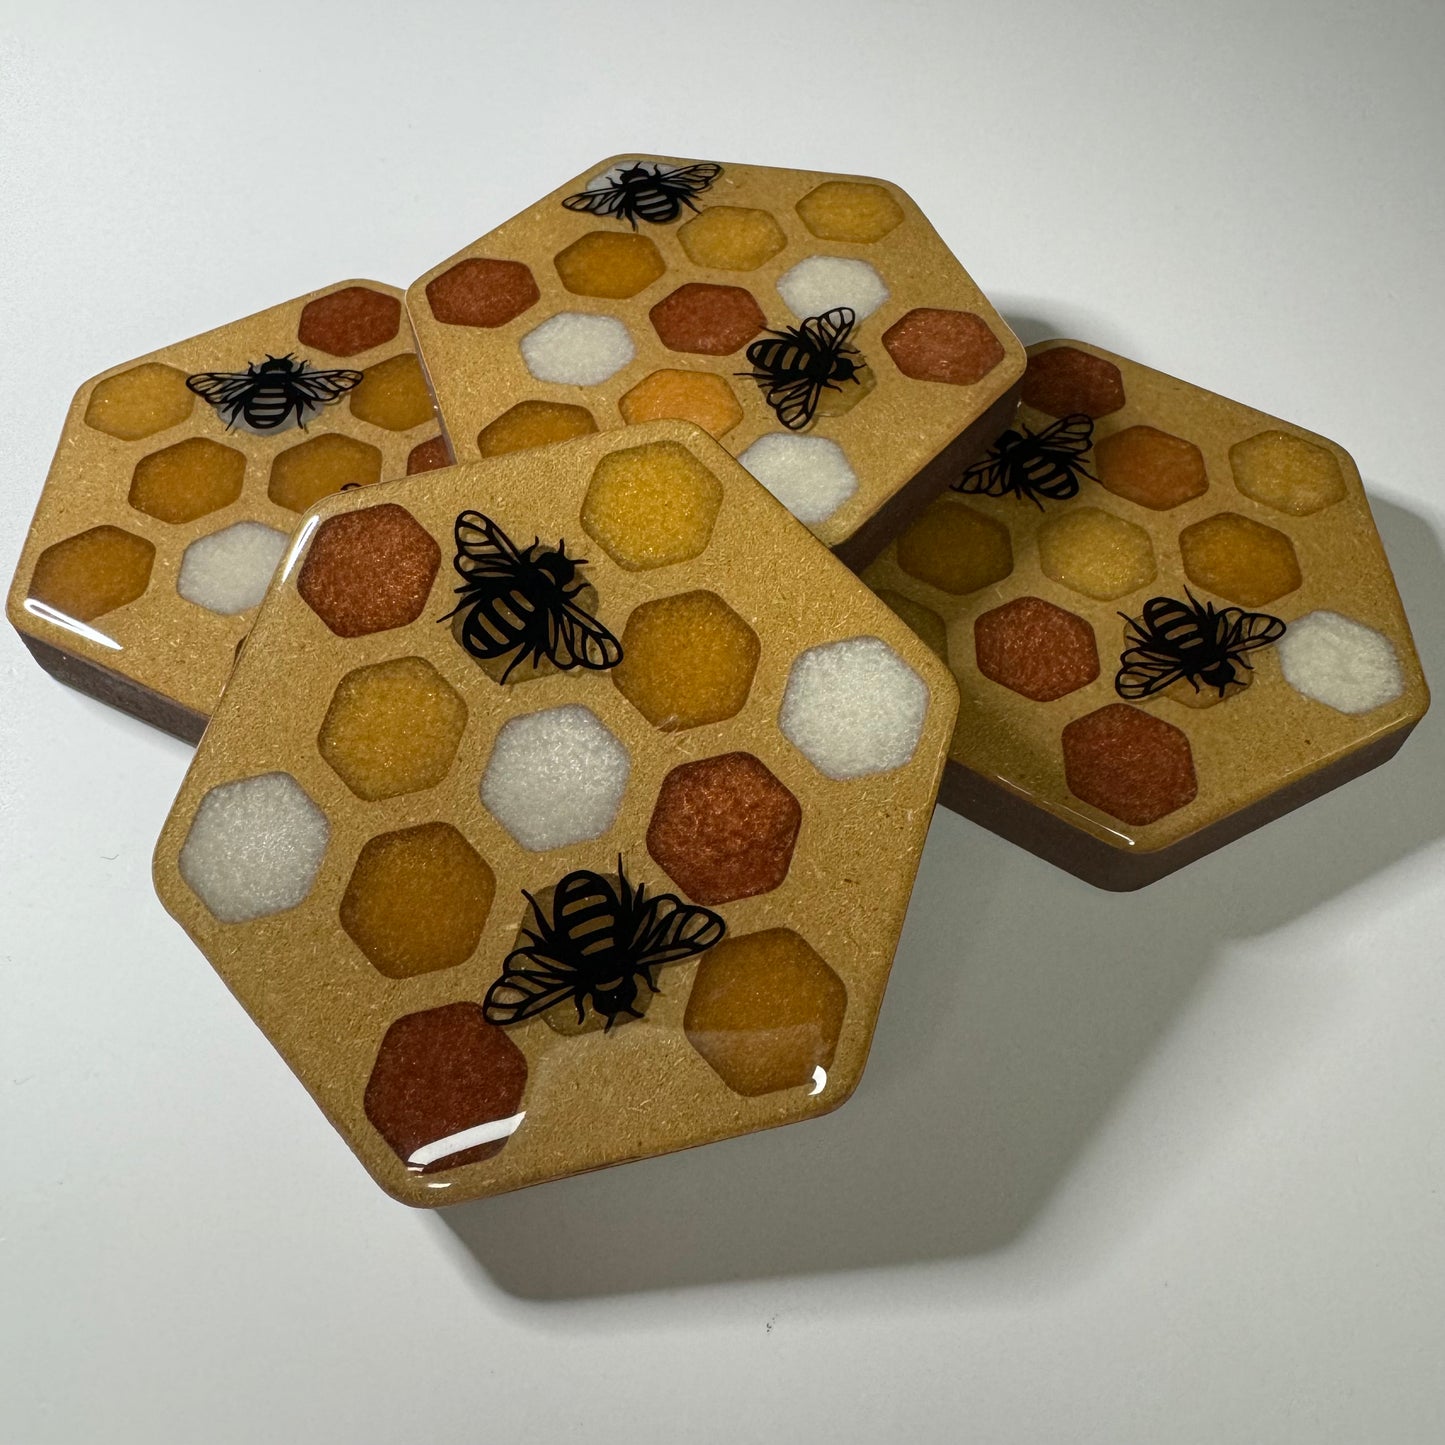 Honey Bee Coasters